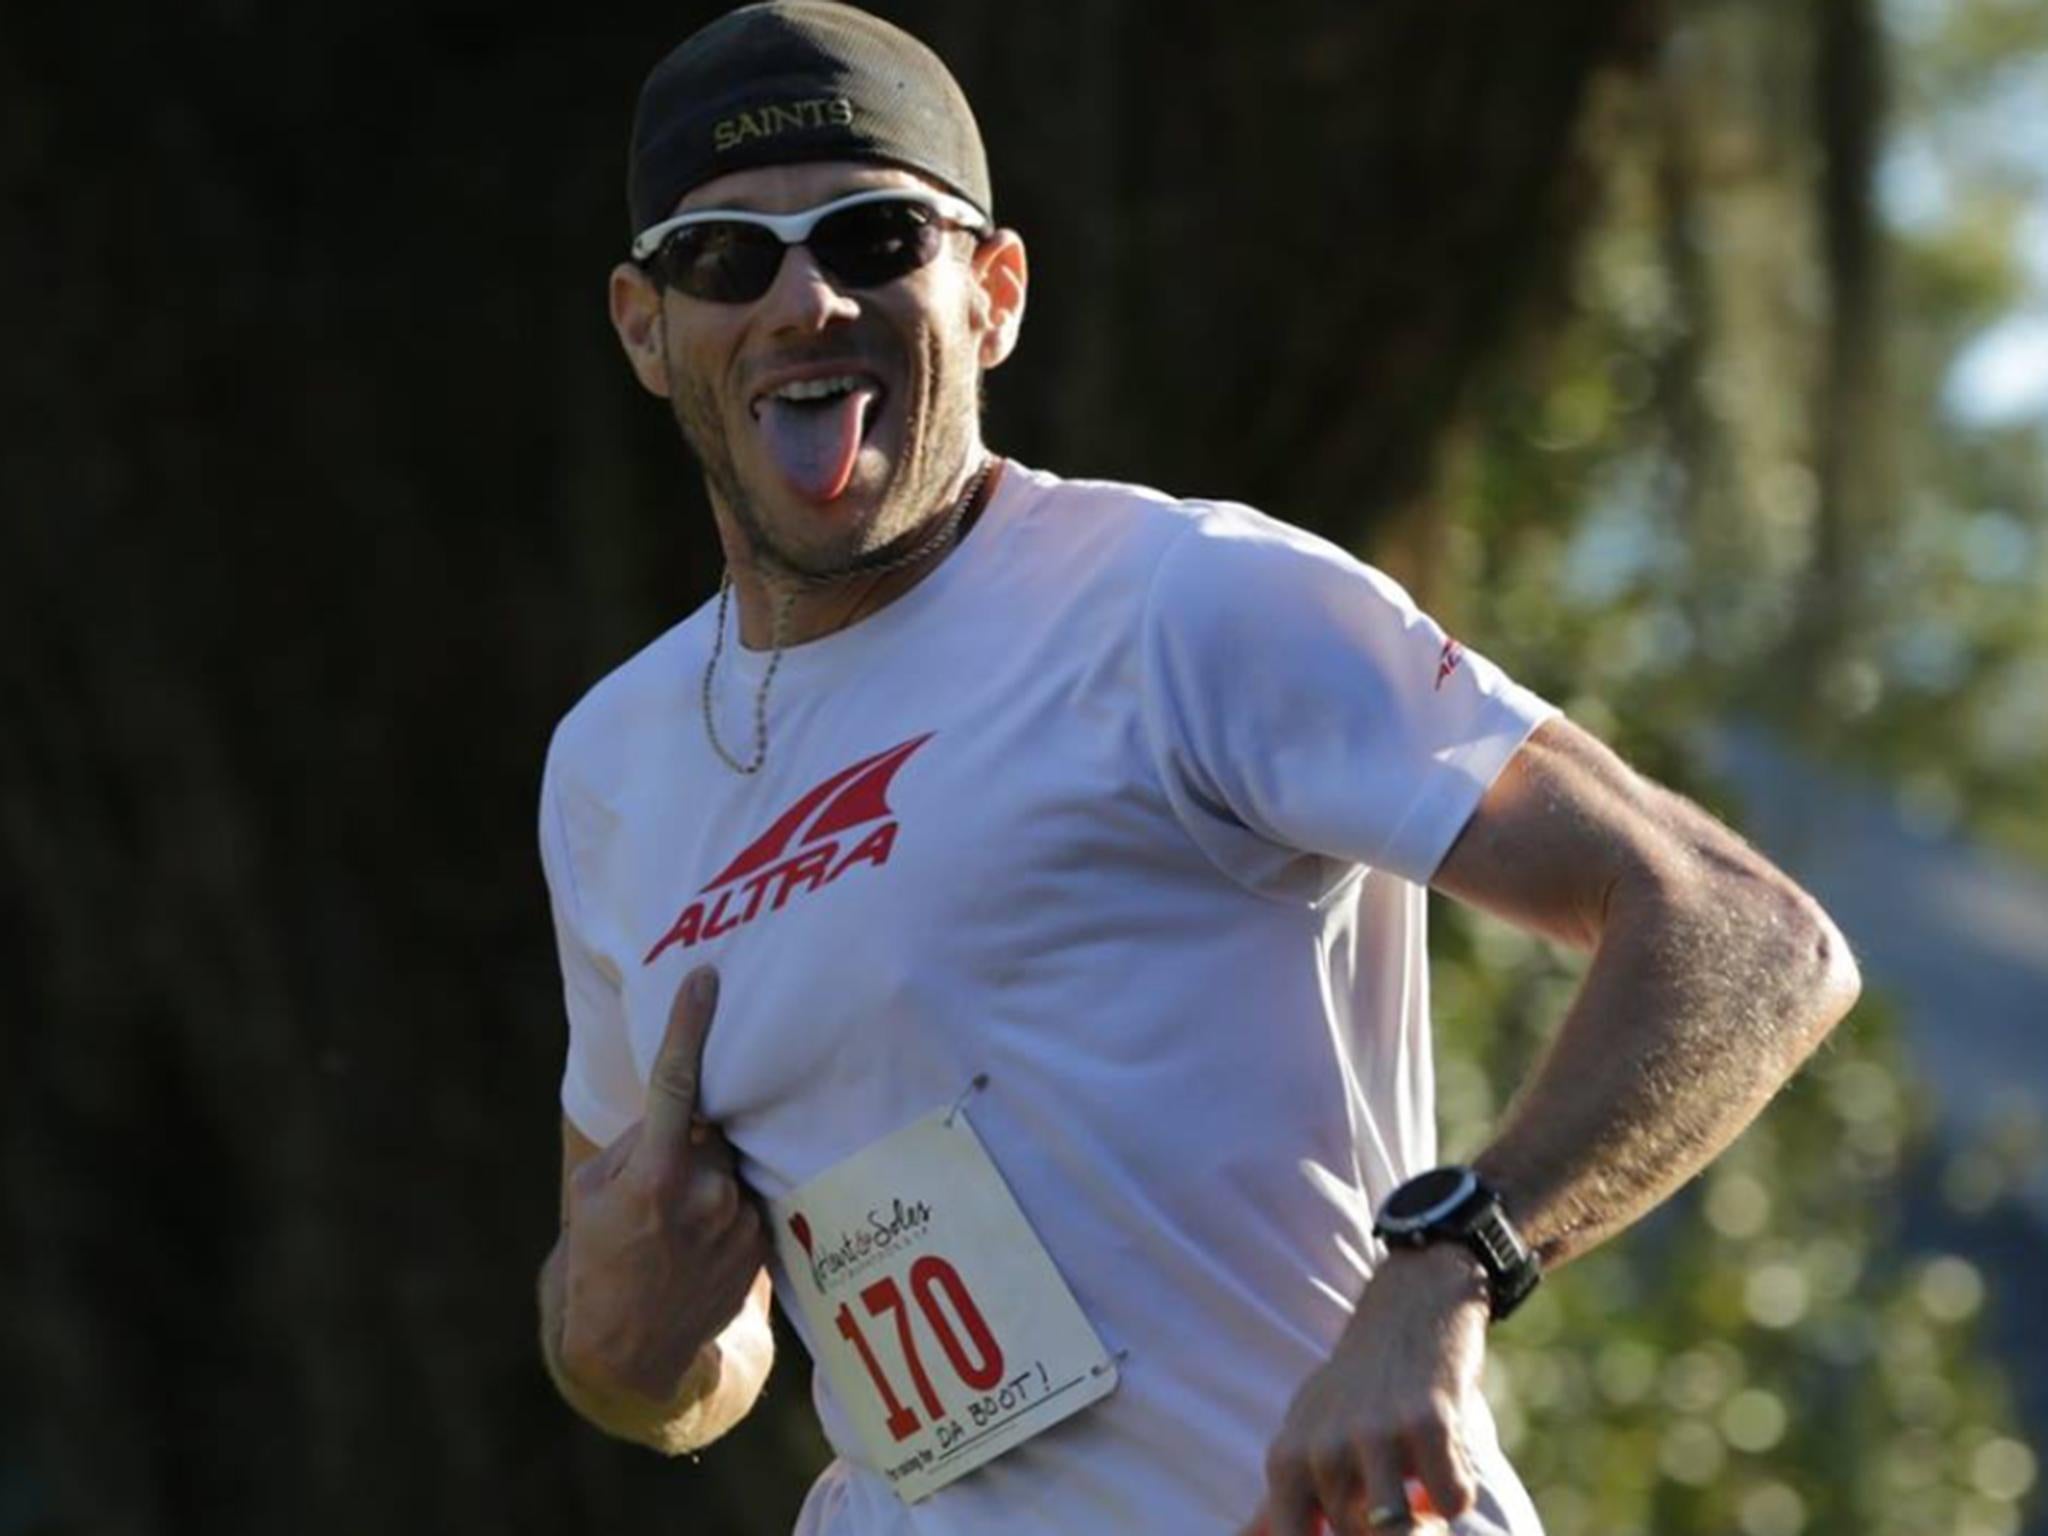 vegan ultra marathon runner